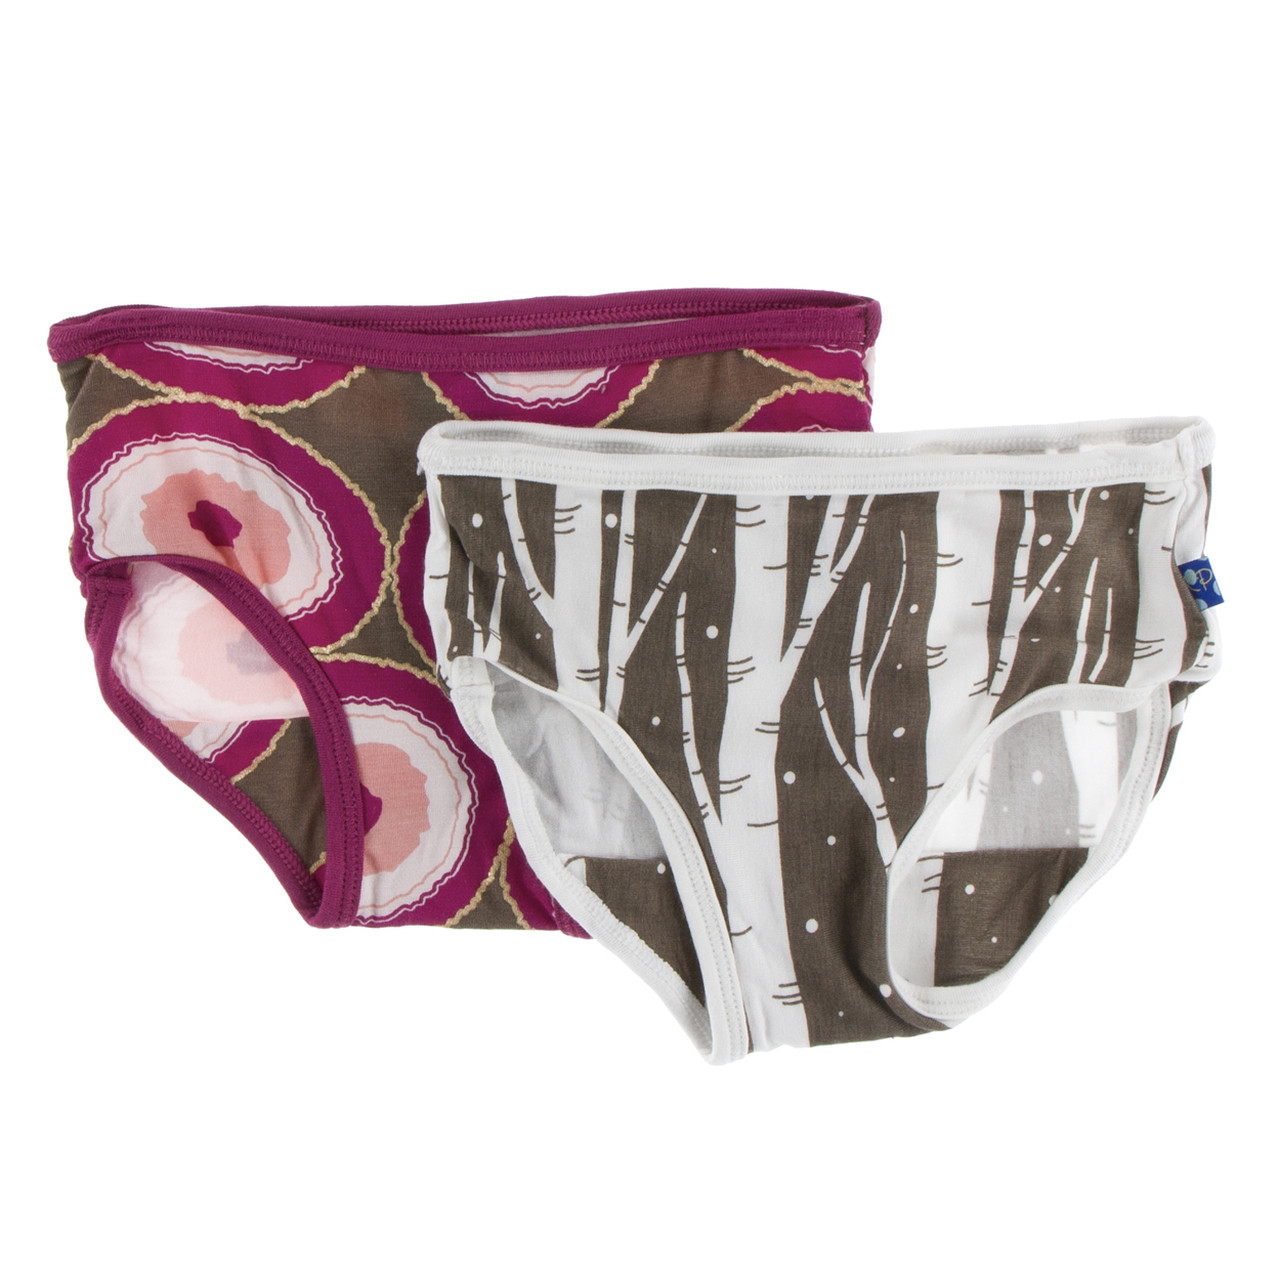 Kic Kee Pants KicKee Pants Girls Underwear, Set of 3, Prints and